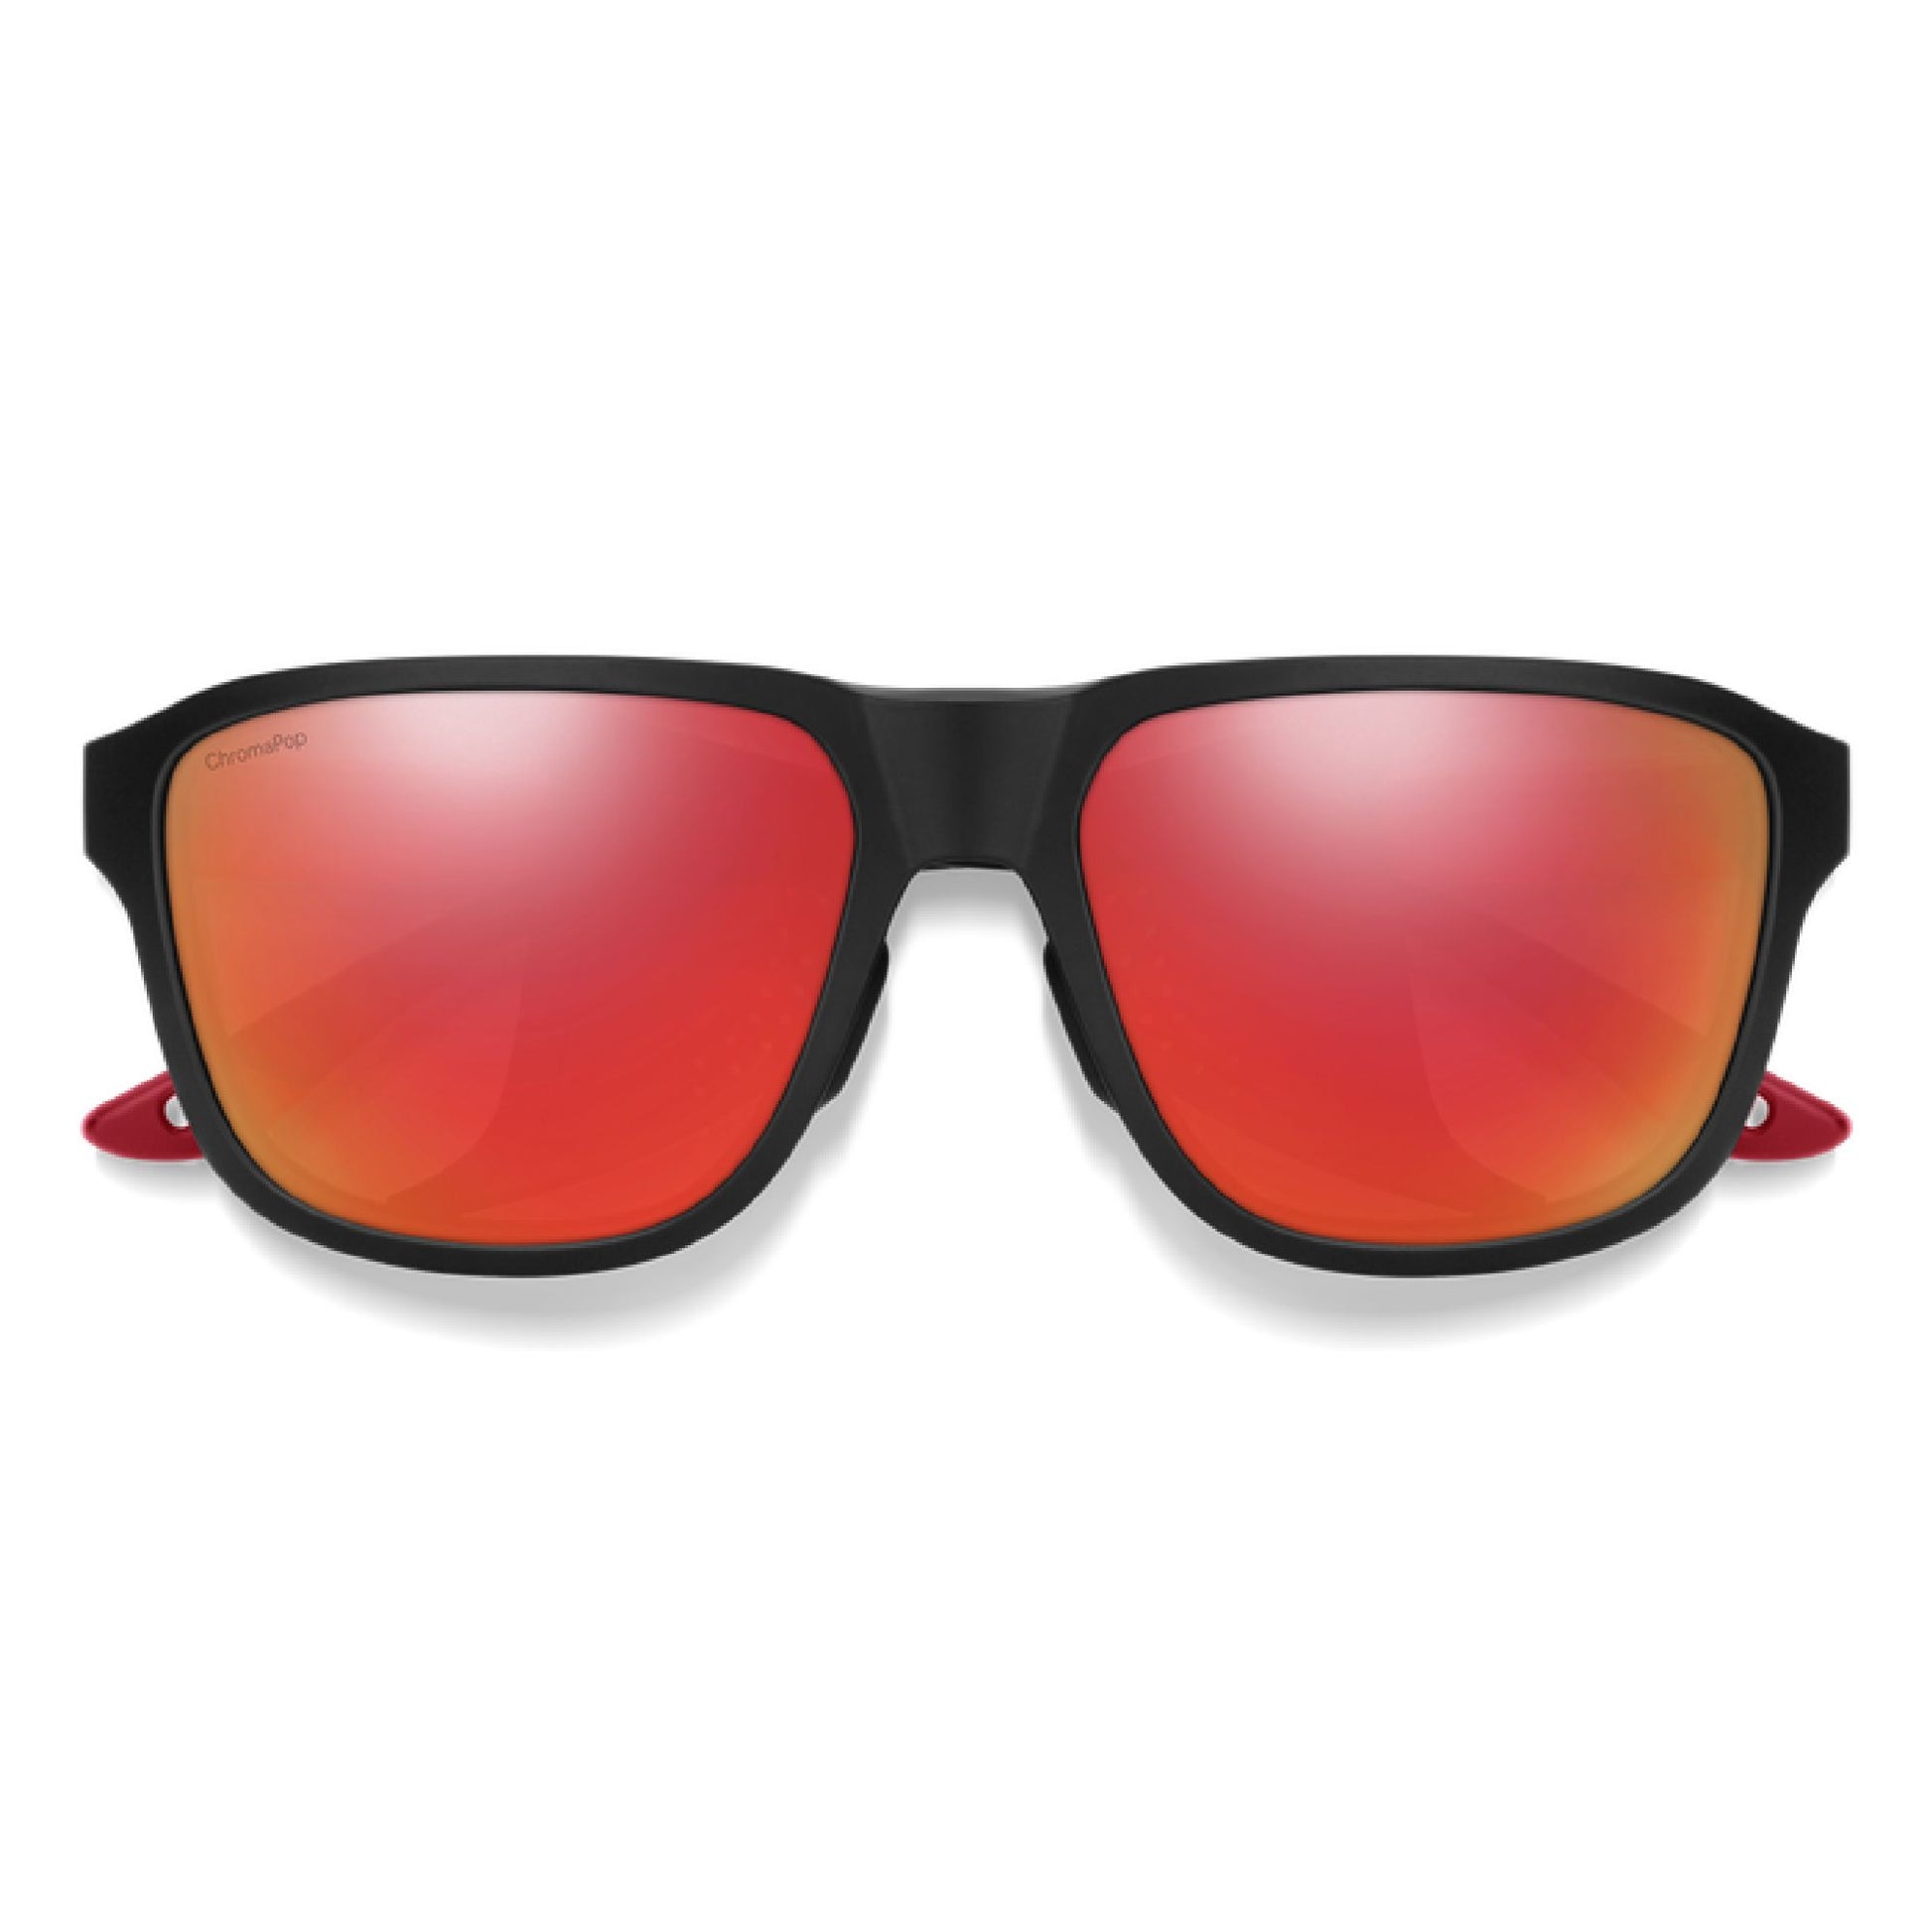 Smith Embark Sunglasses Tnf Matte Black / Horizon Red / ChromaPop Polarized Red Mirror Sunglasses